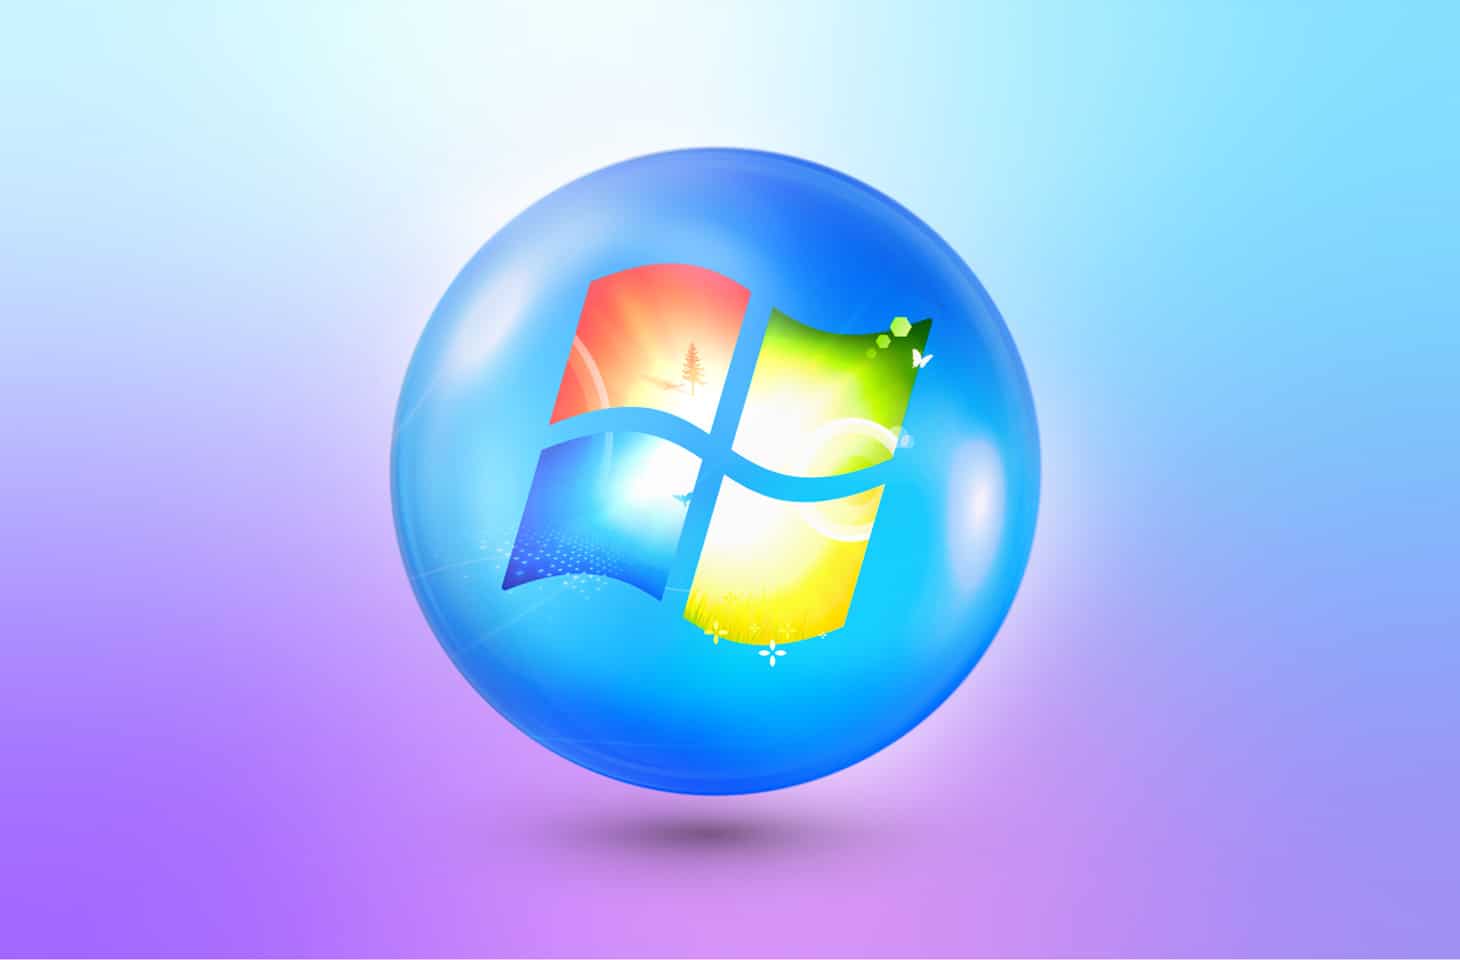 Windows 7 recovery disc glitch